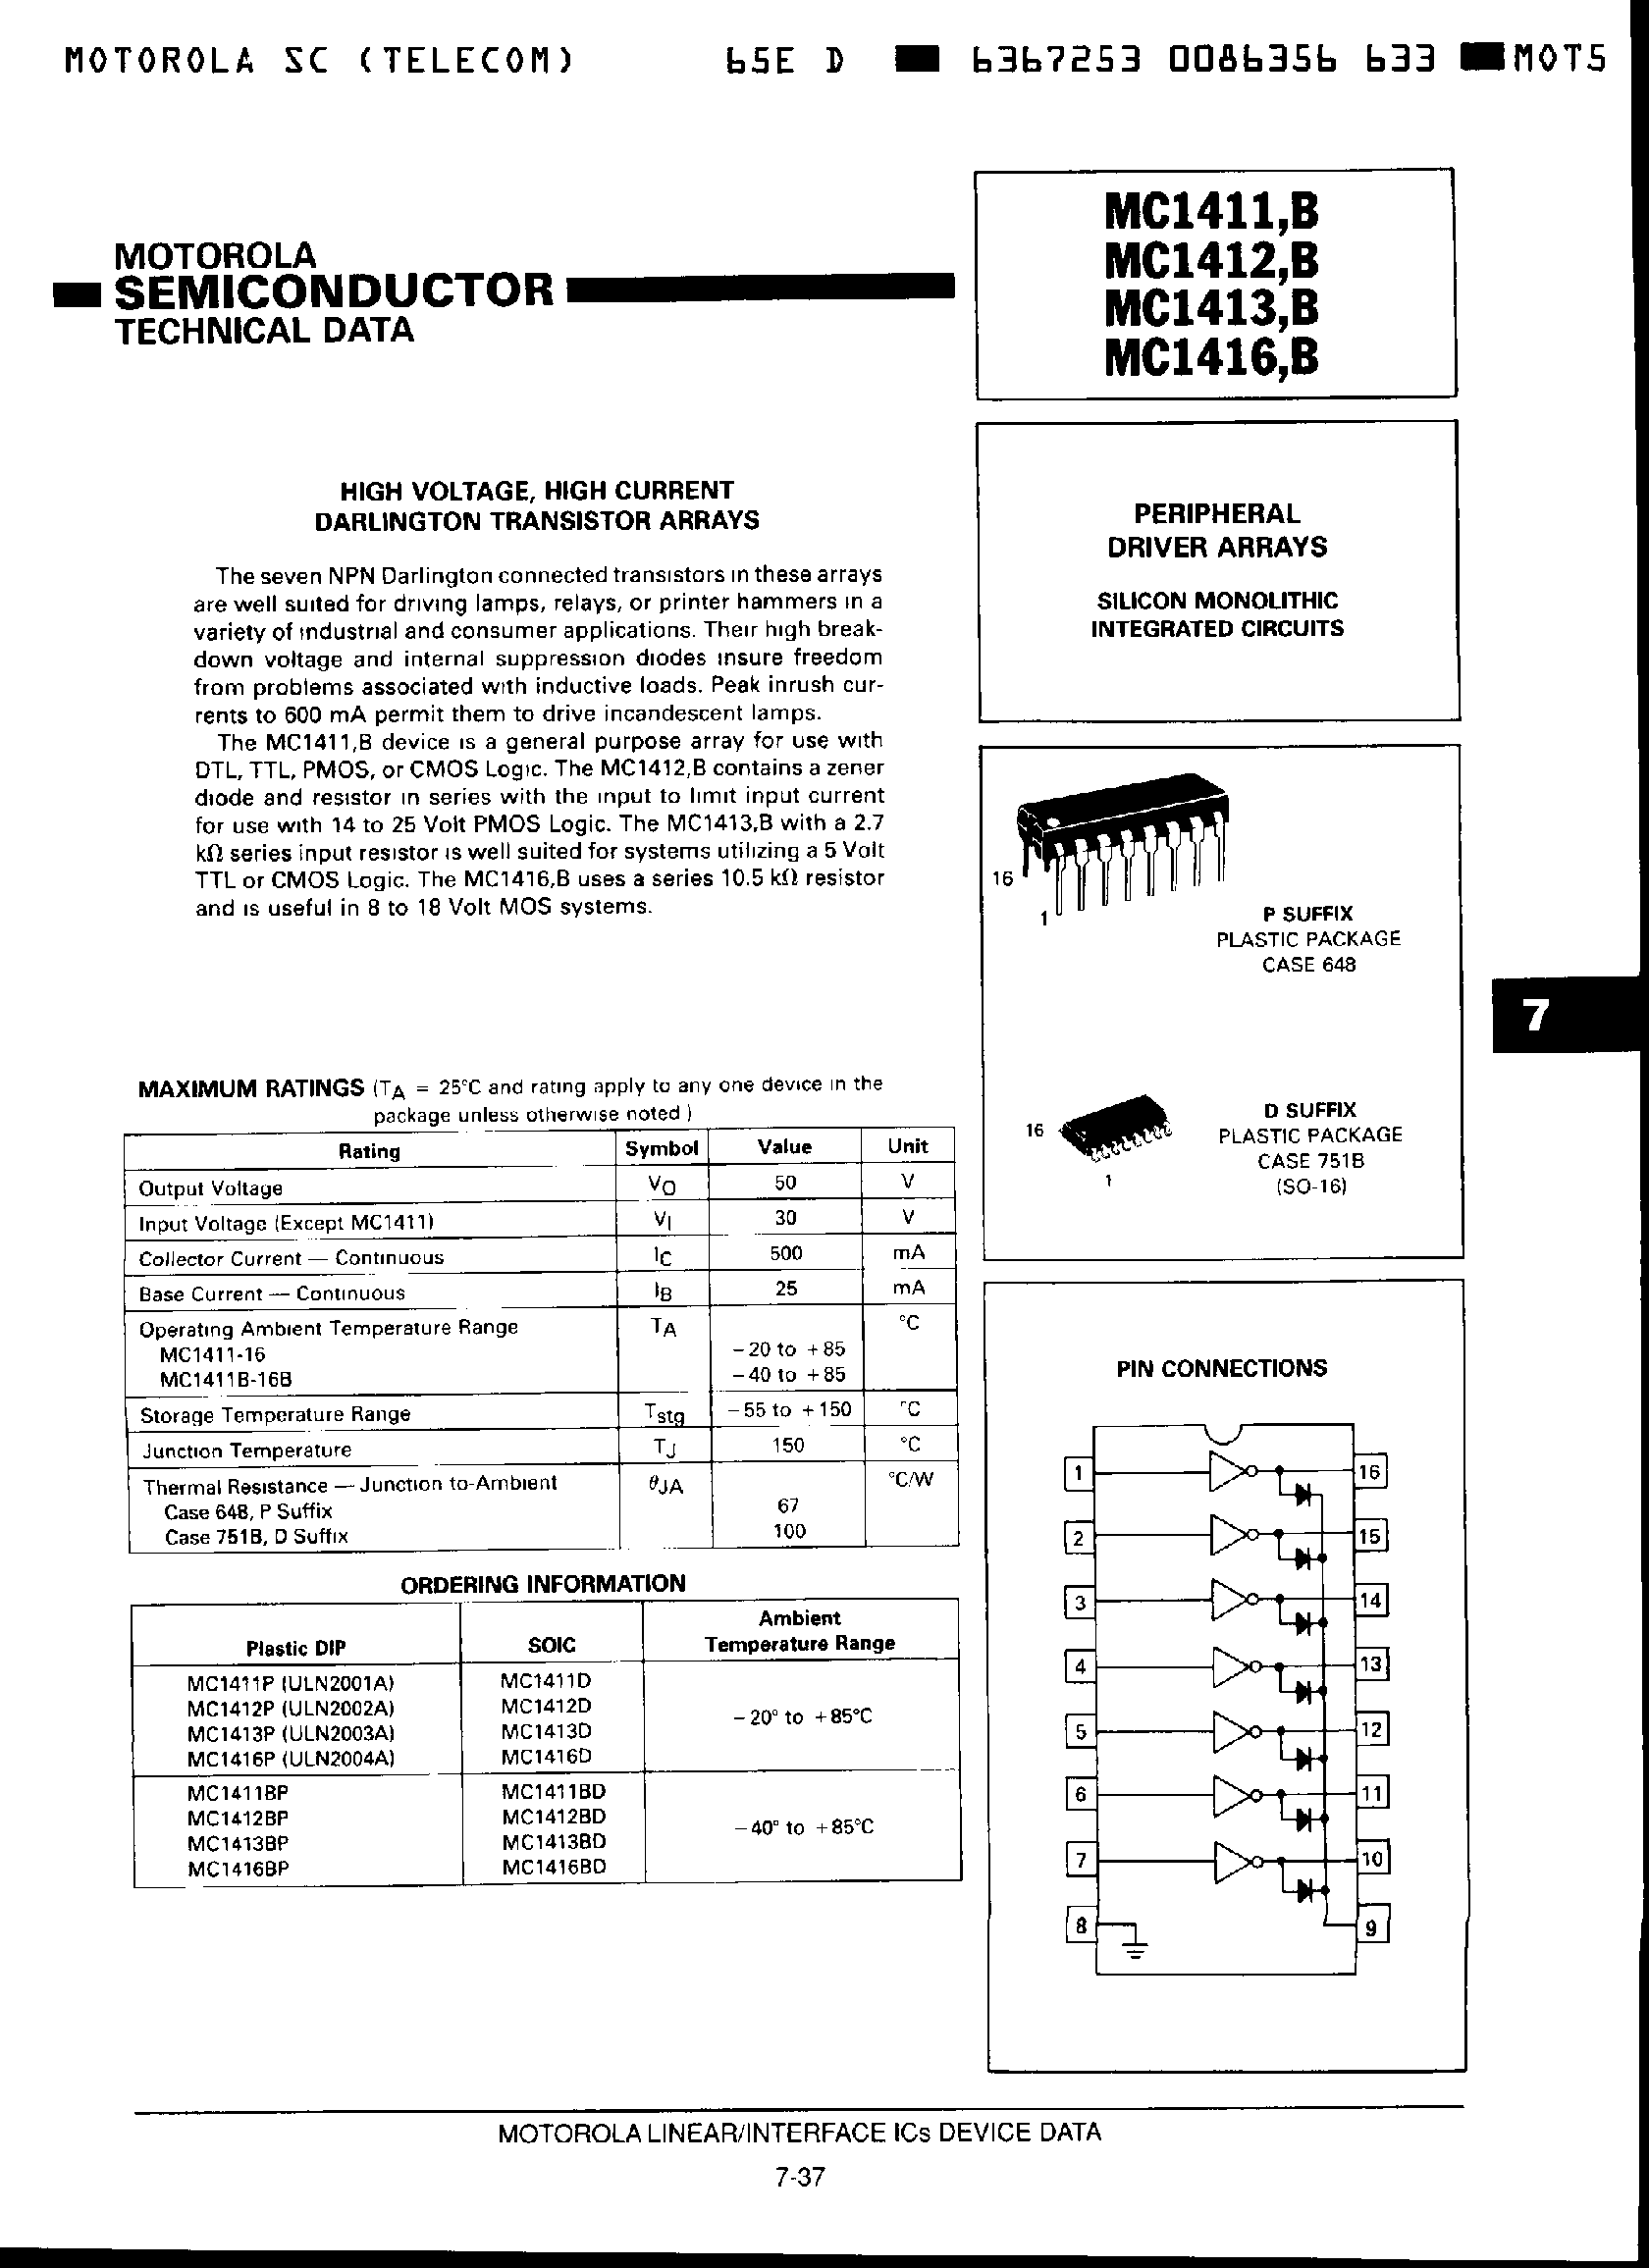 Datasheet MC1413BD - PERIPHERAL DRIVER ARRAYS page 1